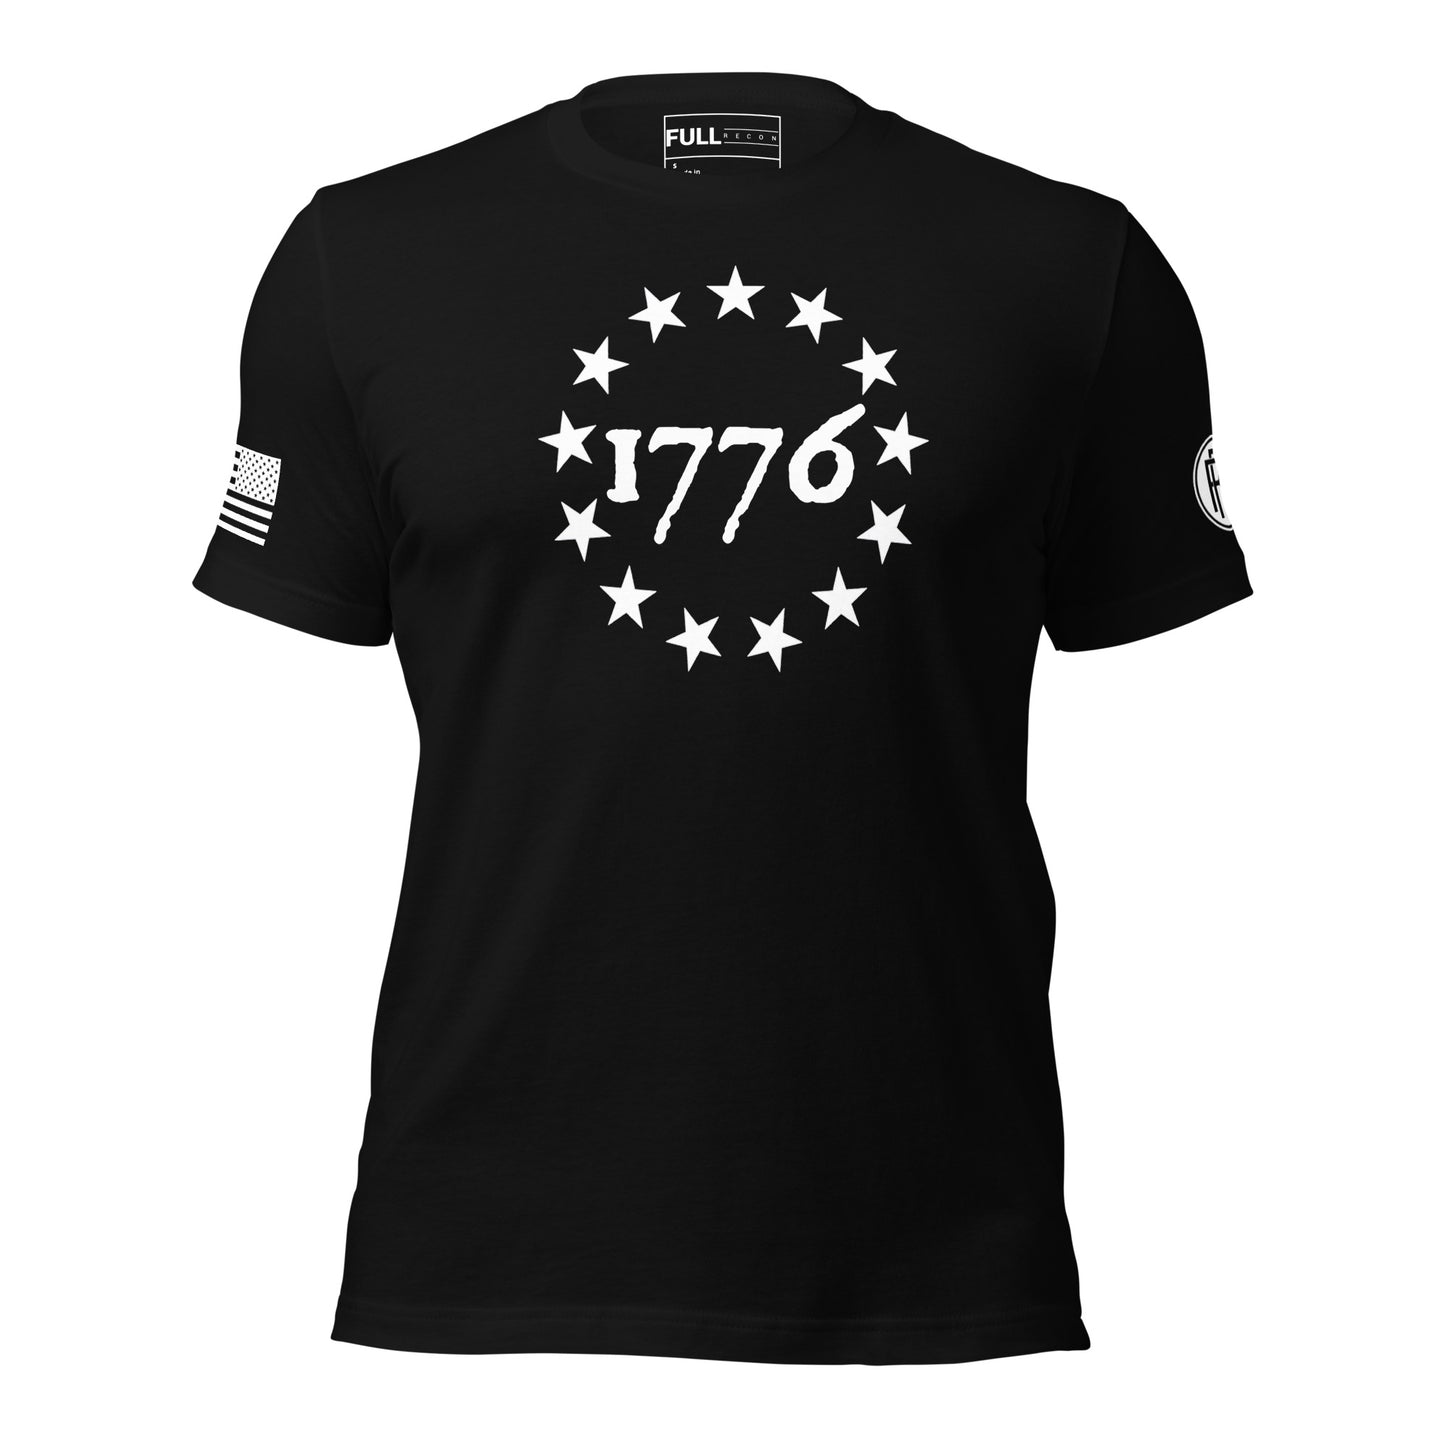 Stars of 1776